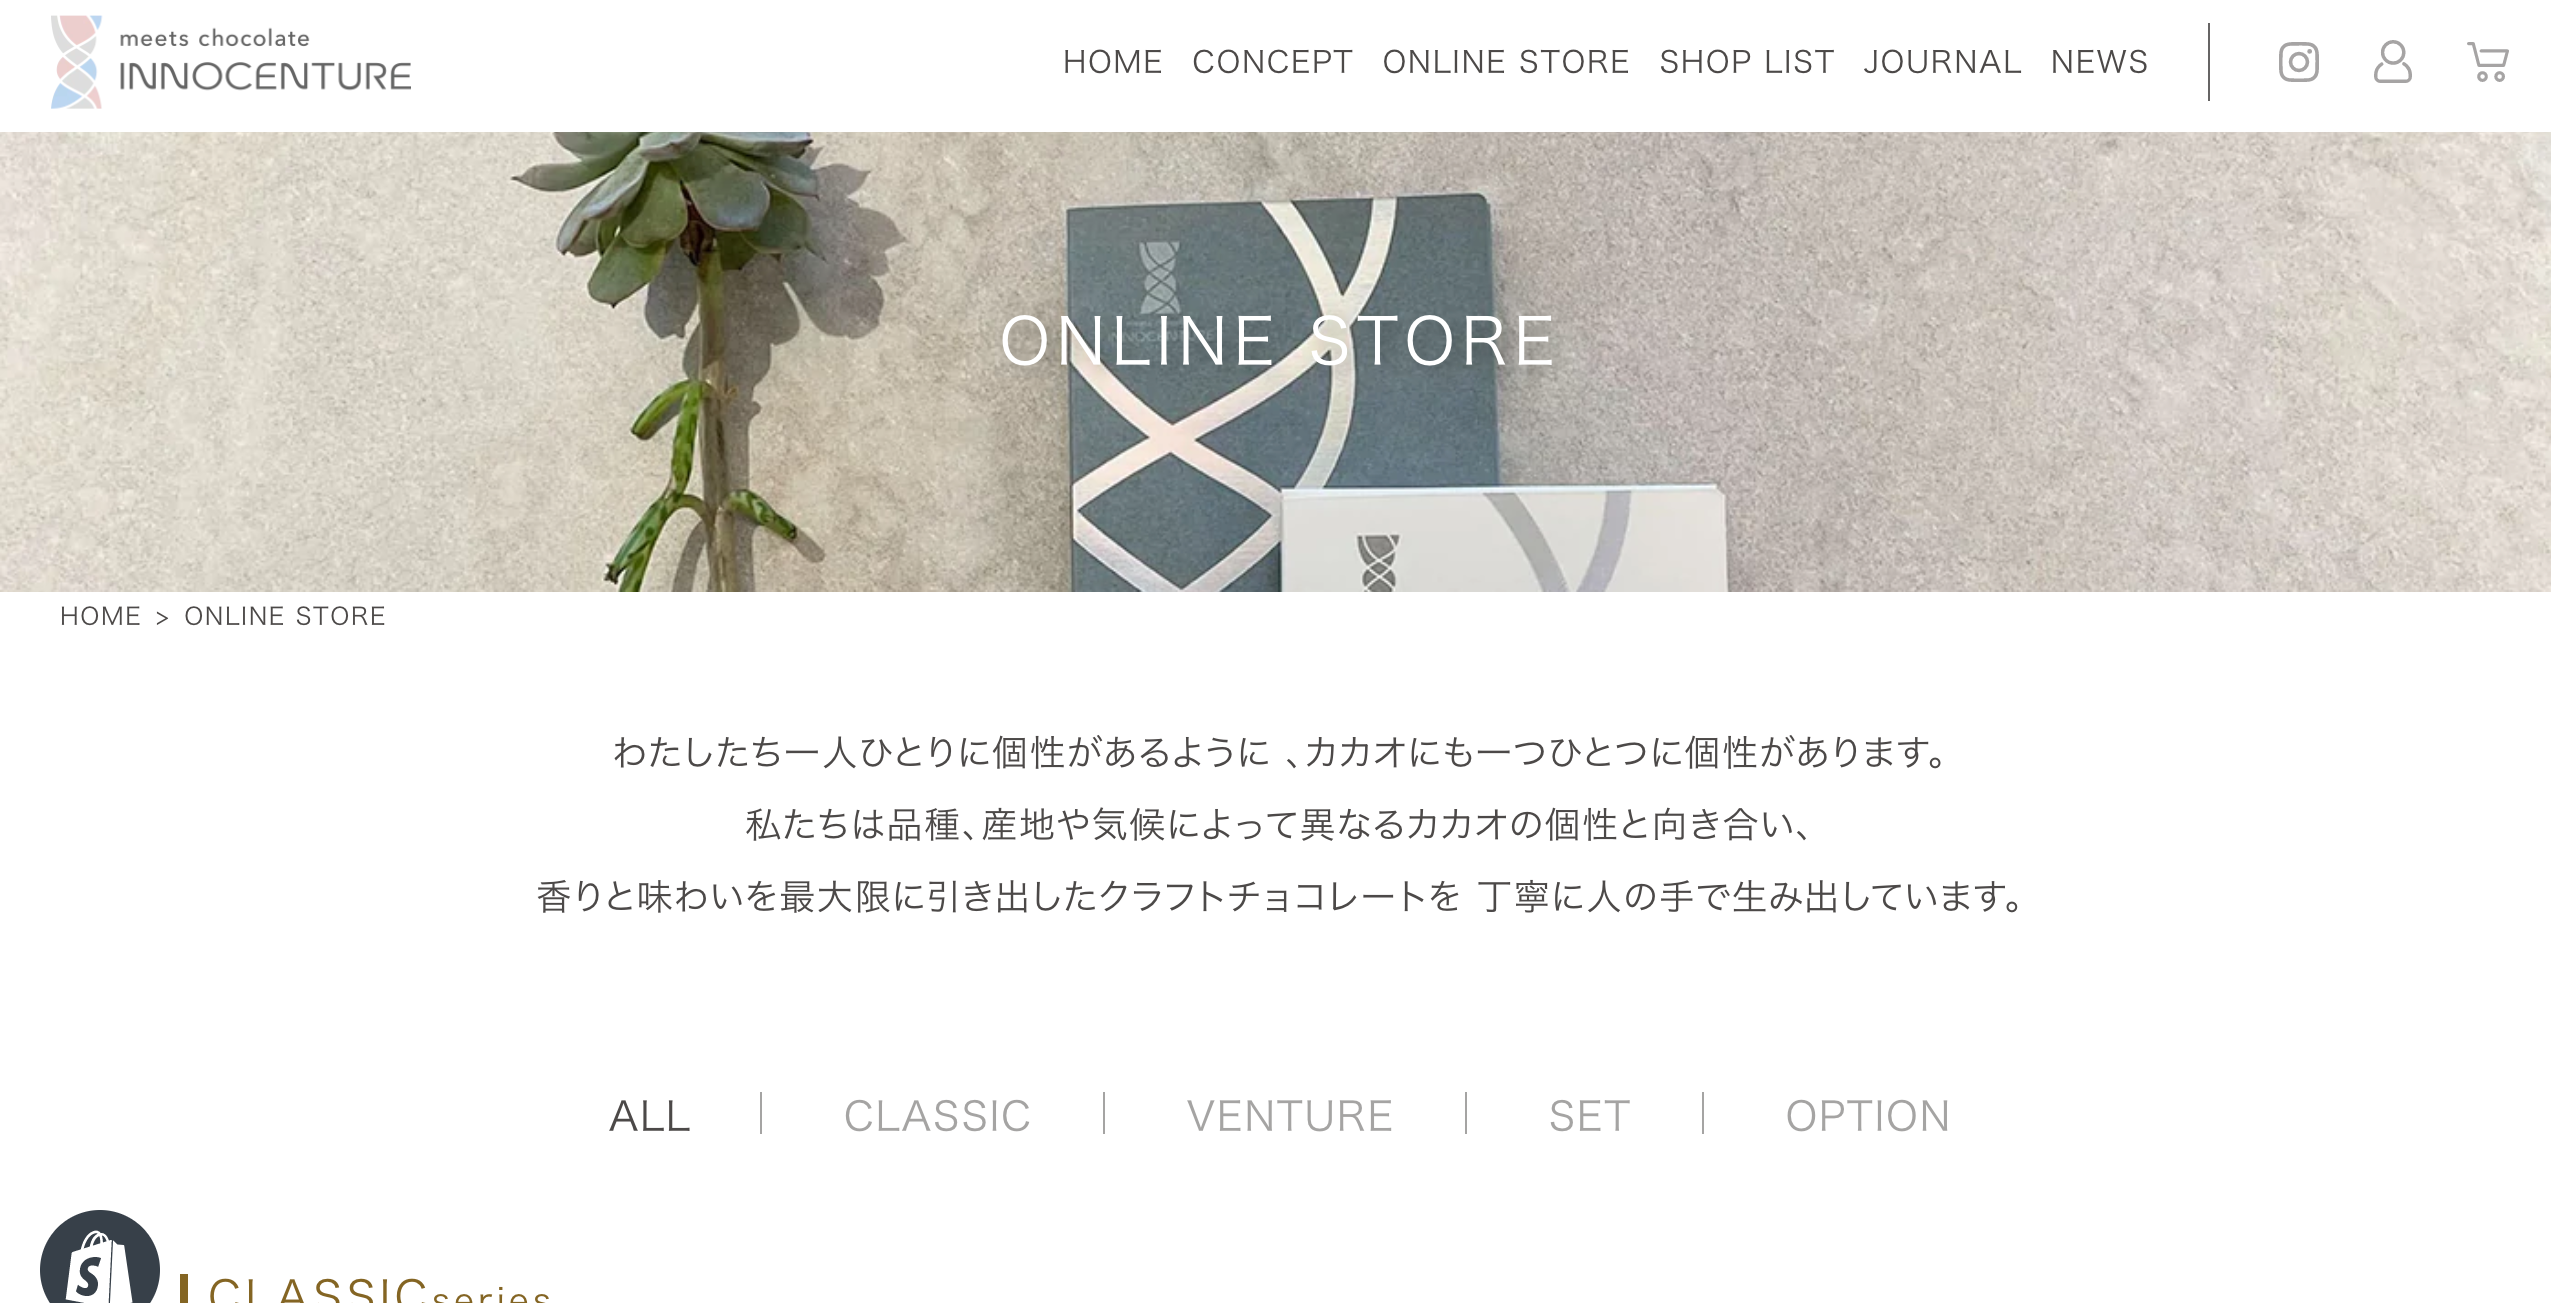 INNOCENTURE 公式ECサイトオープン☆